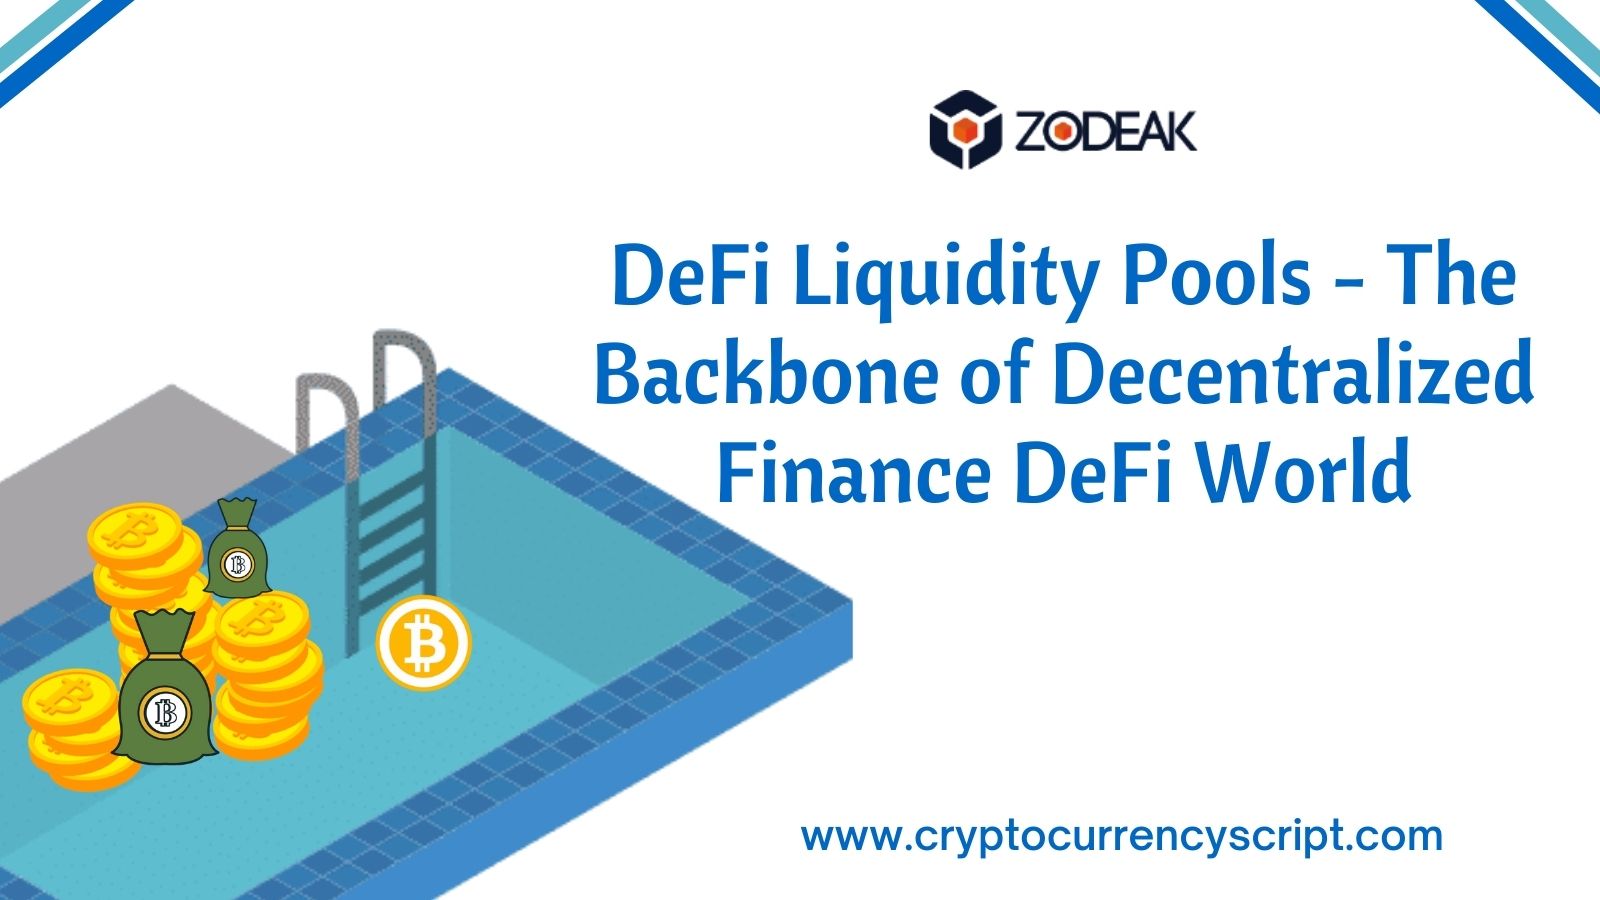 DeFi Liquidity Pools – The Backbone of Decentralized Finance DeFi World